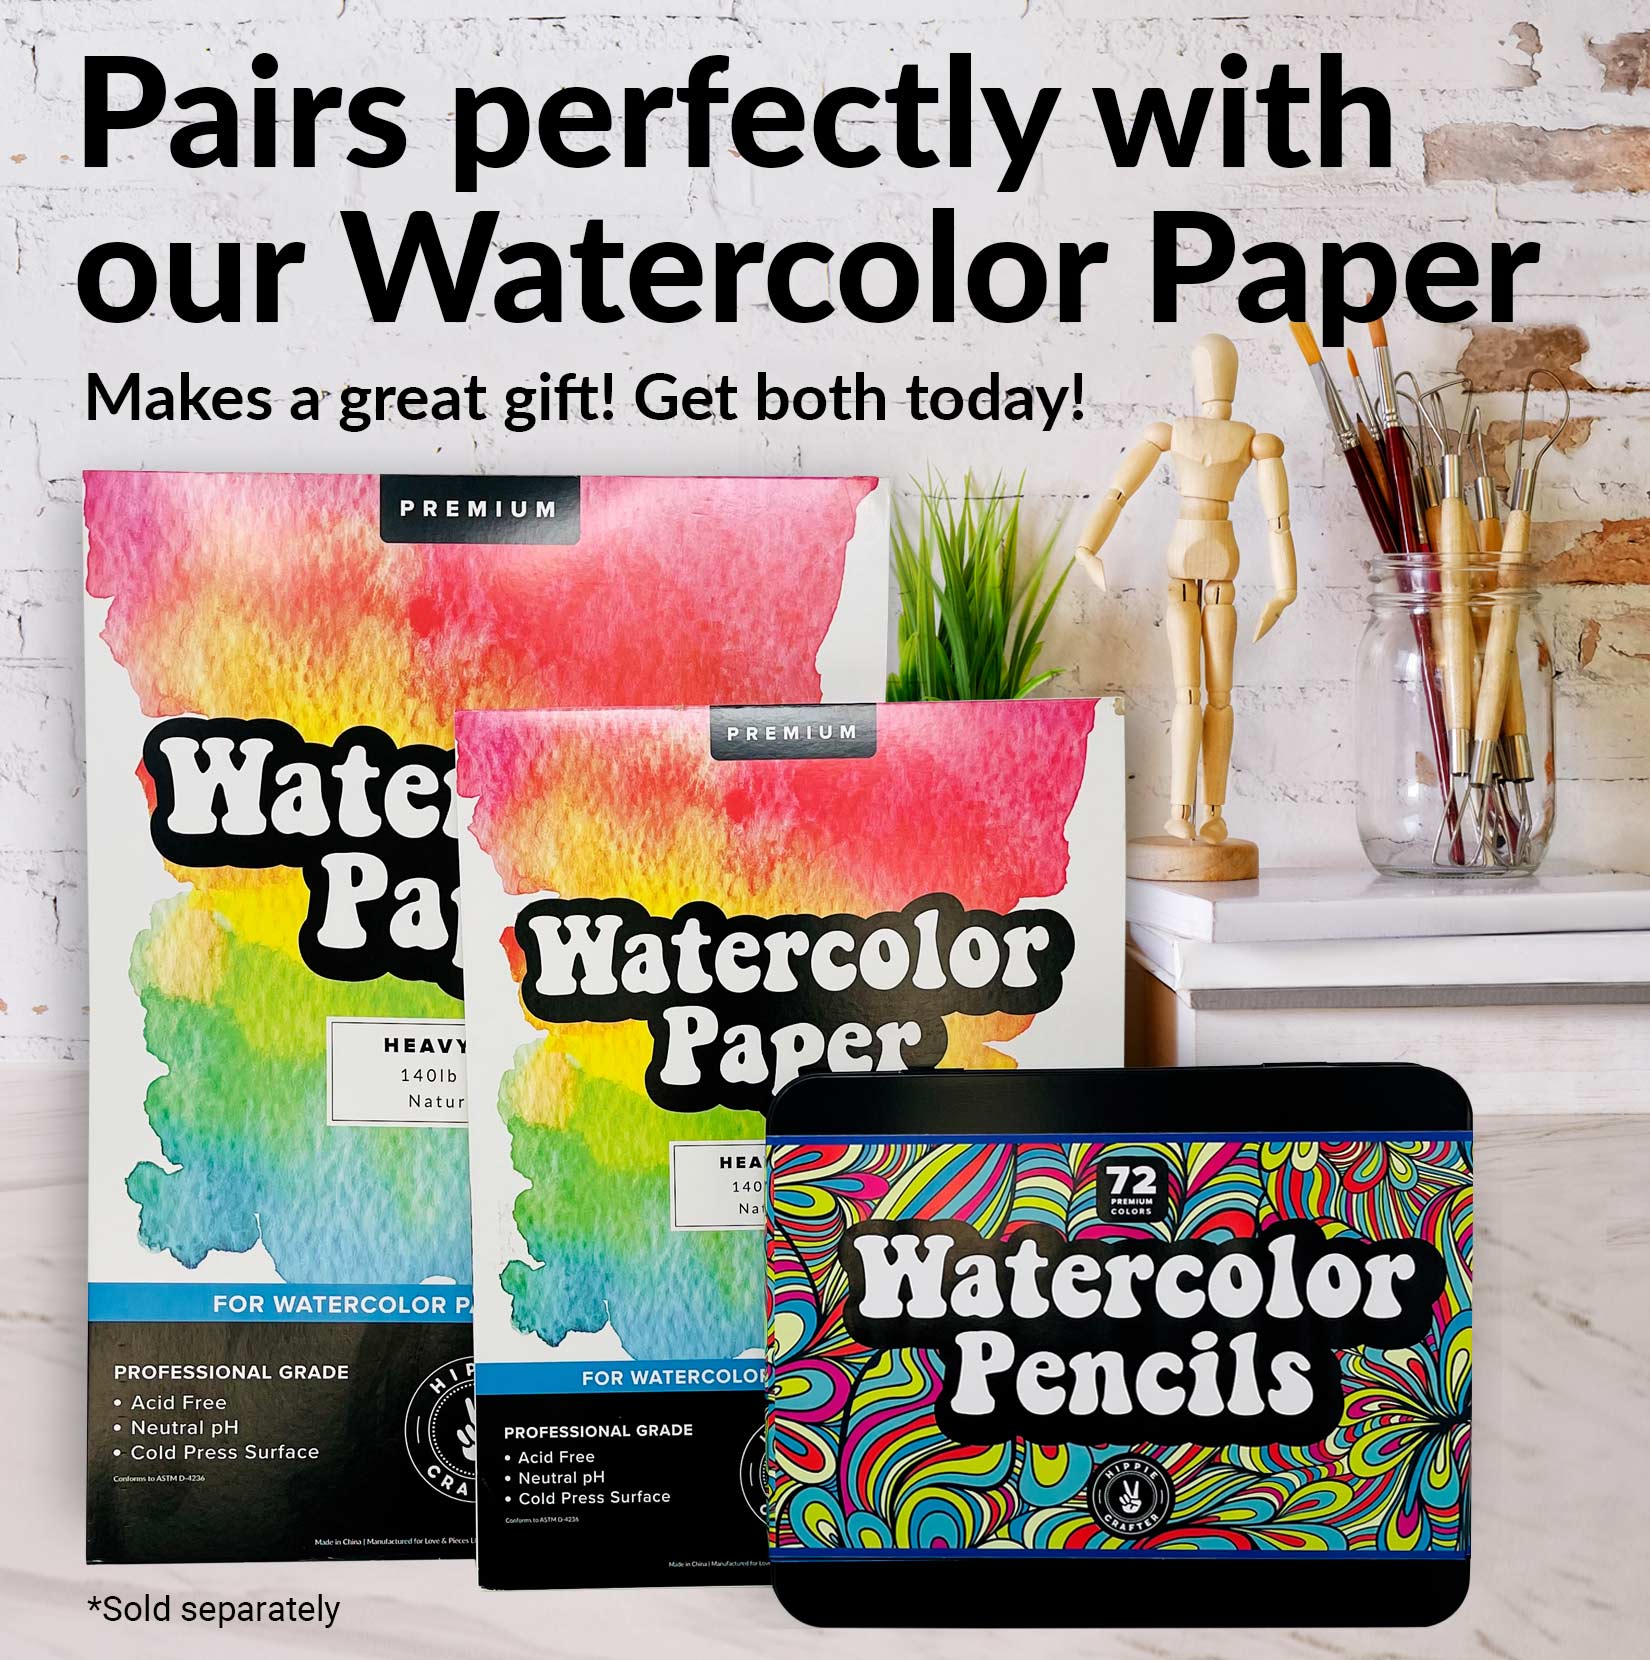 Watercolor pencils and watercolor paper pads